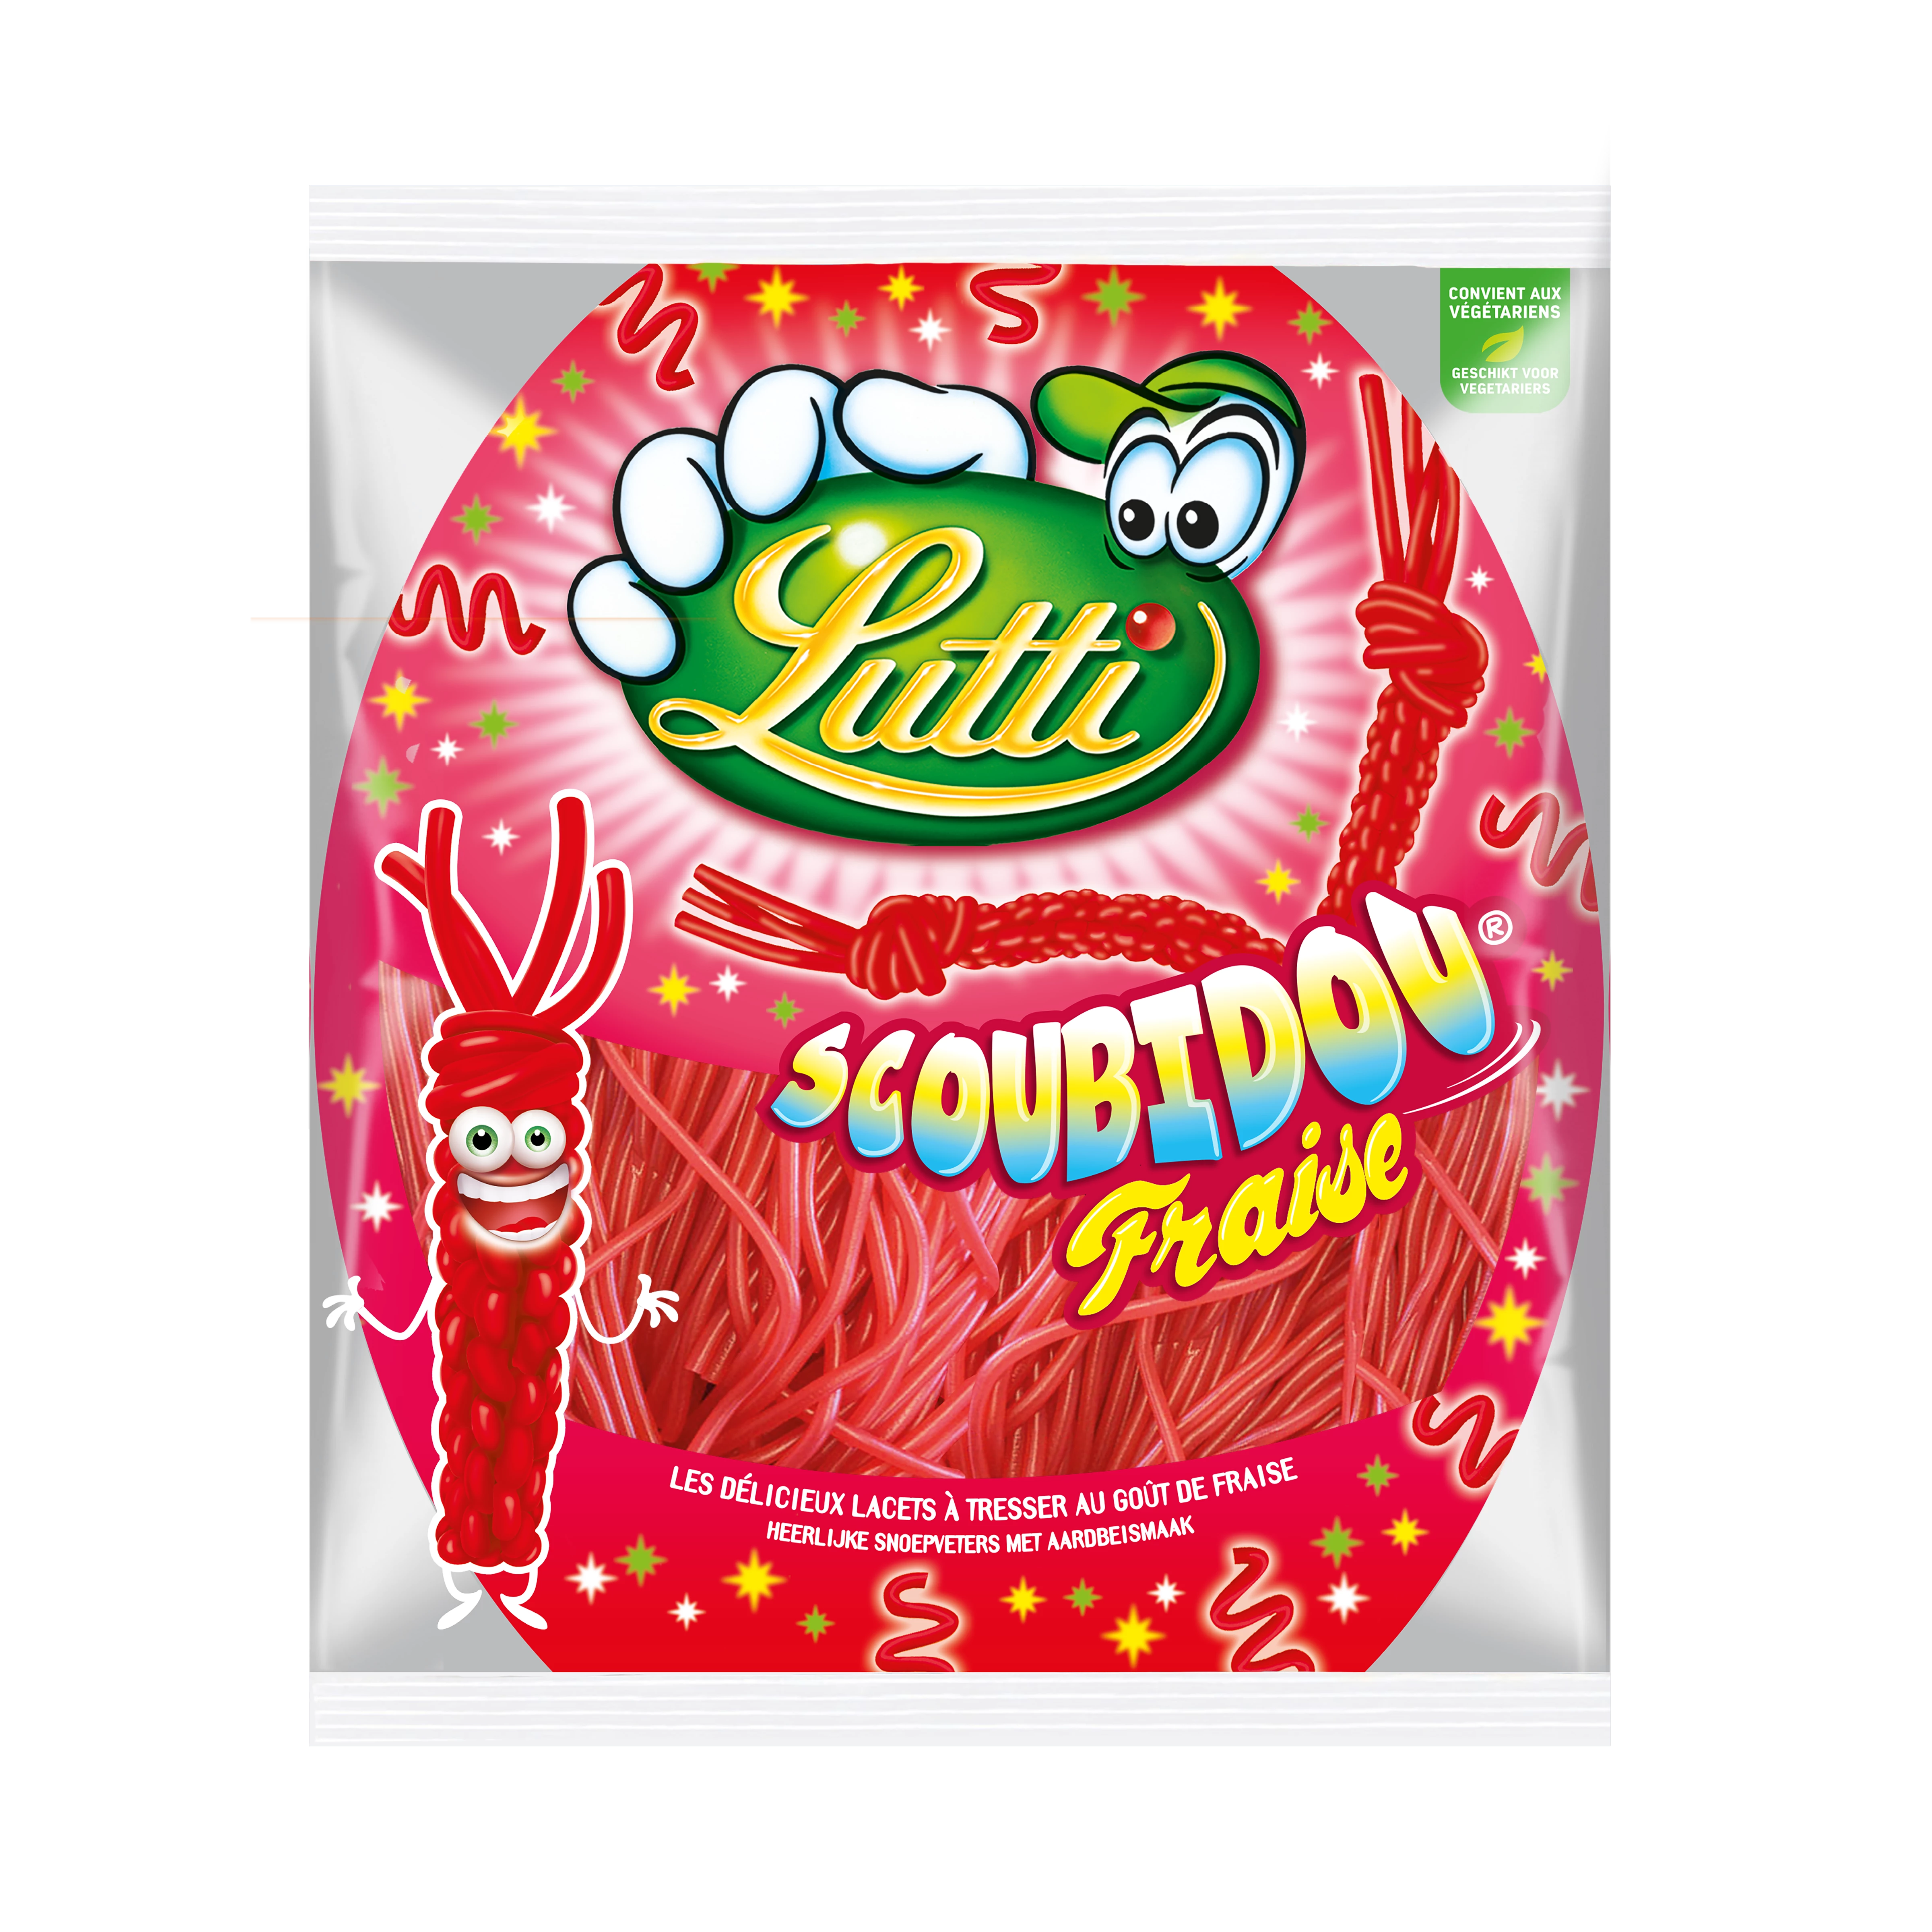 Scoubidou草莓糖； 200克 - LUTTI